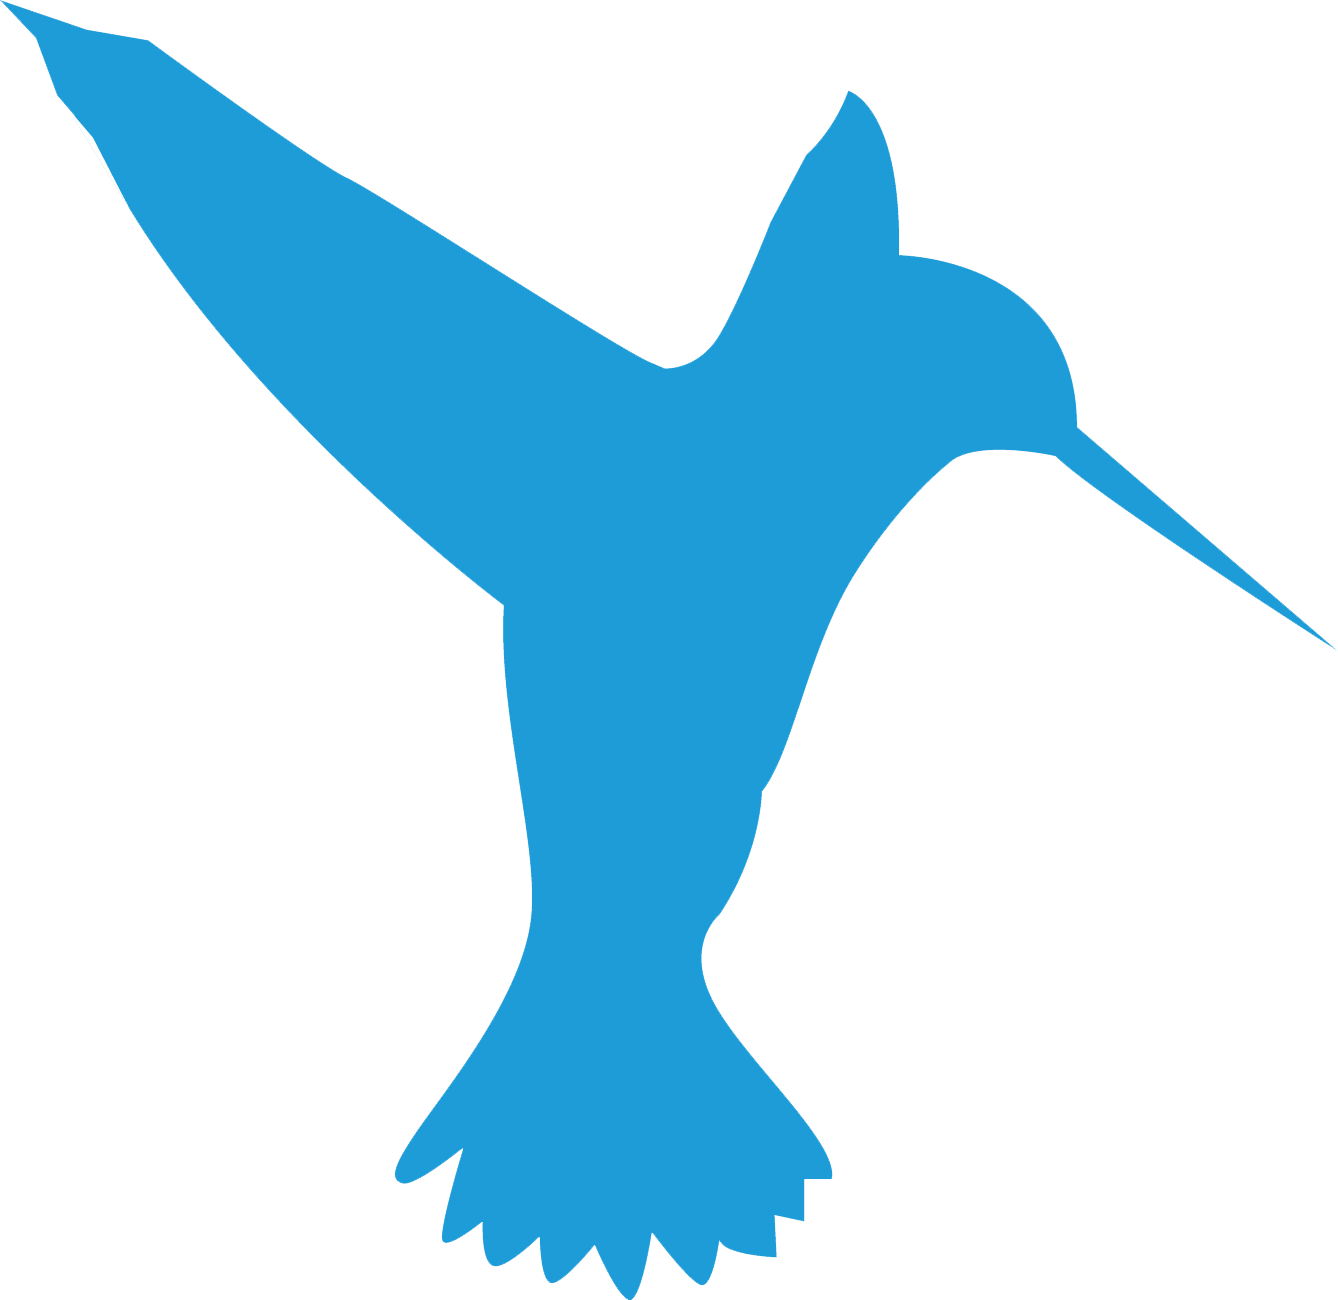 Riverbird GmbH